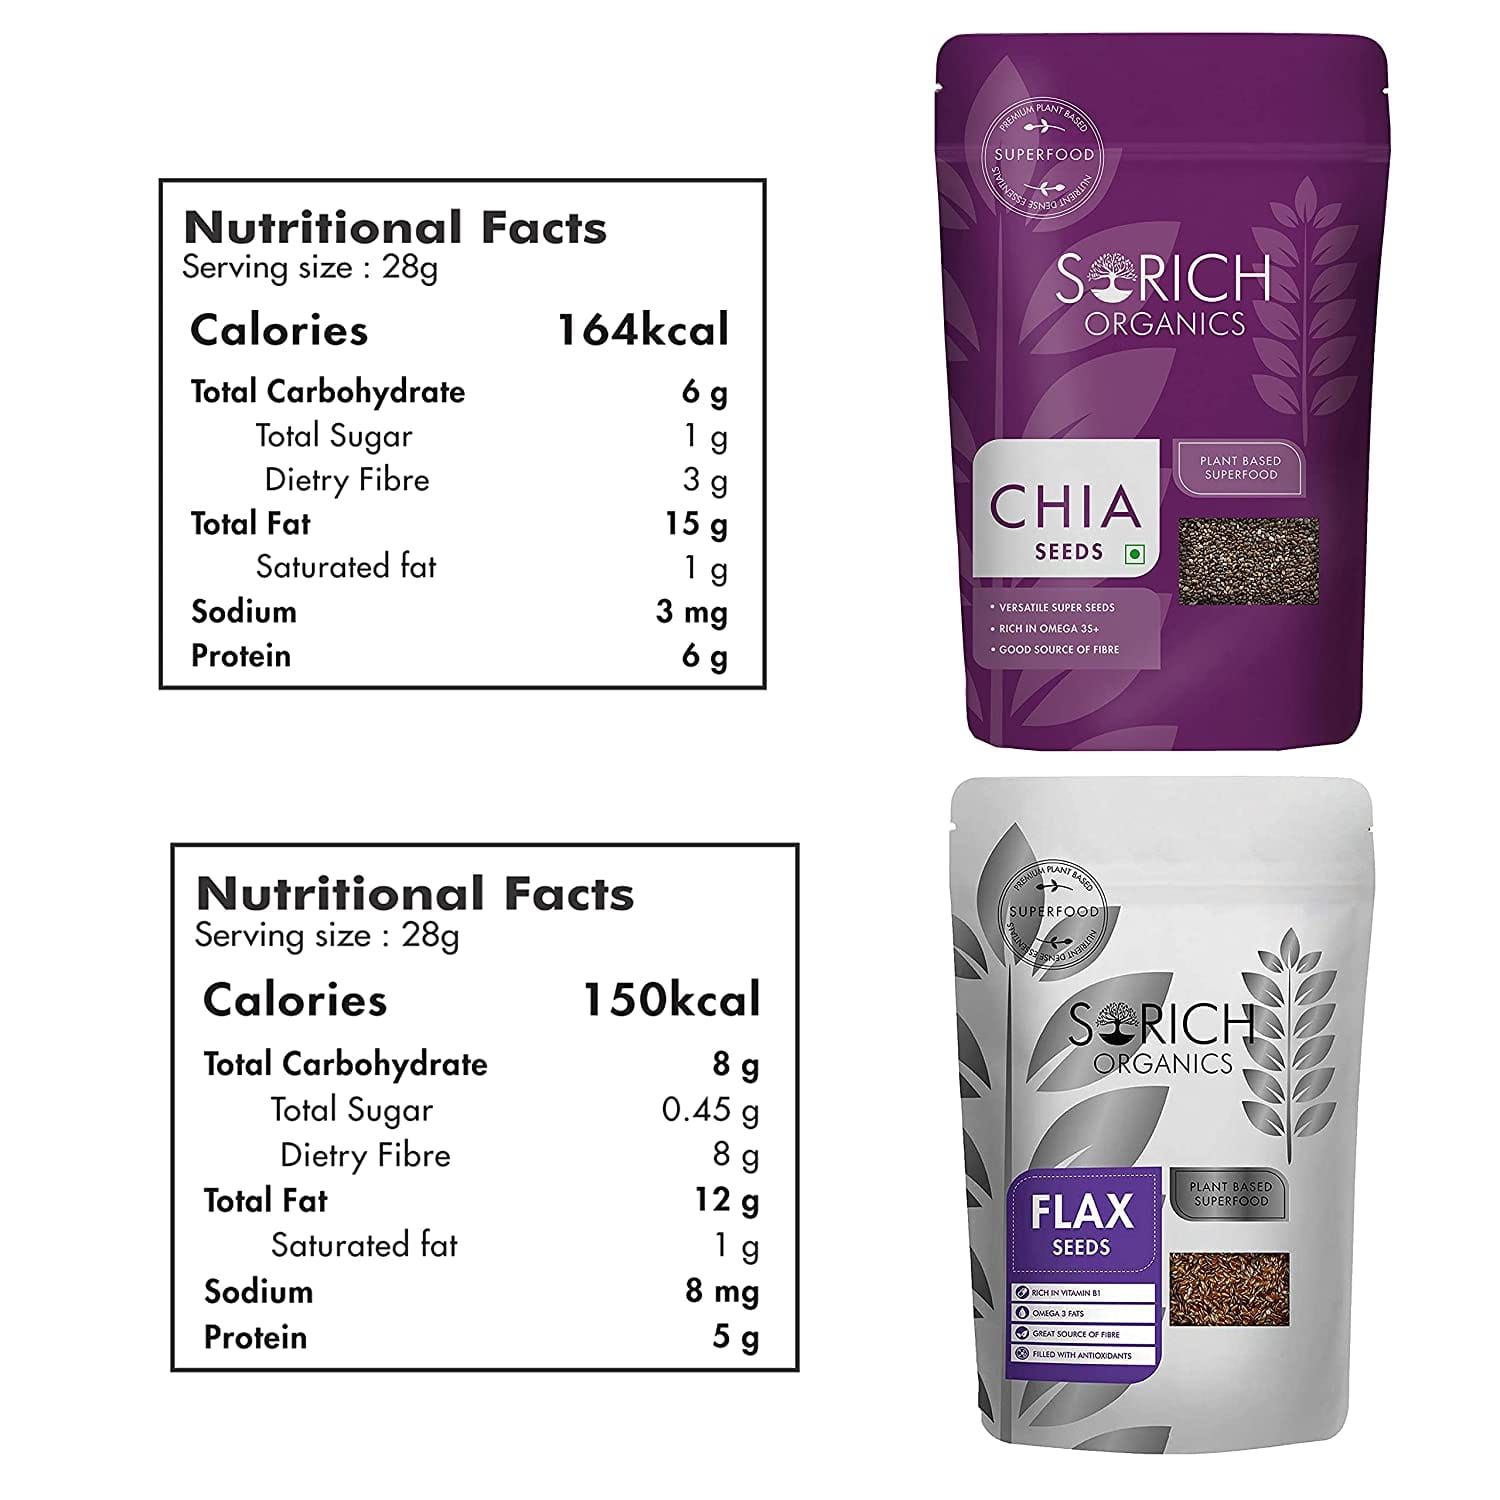 Chia 250 gm and Flax Seeds 200 gm - 450 gm